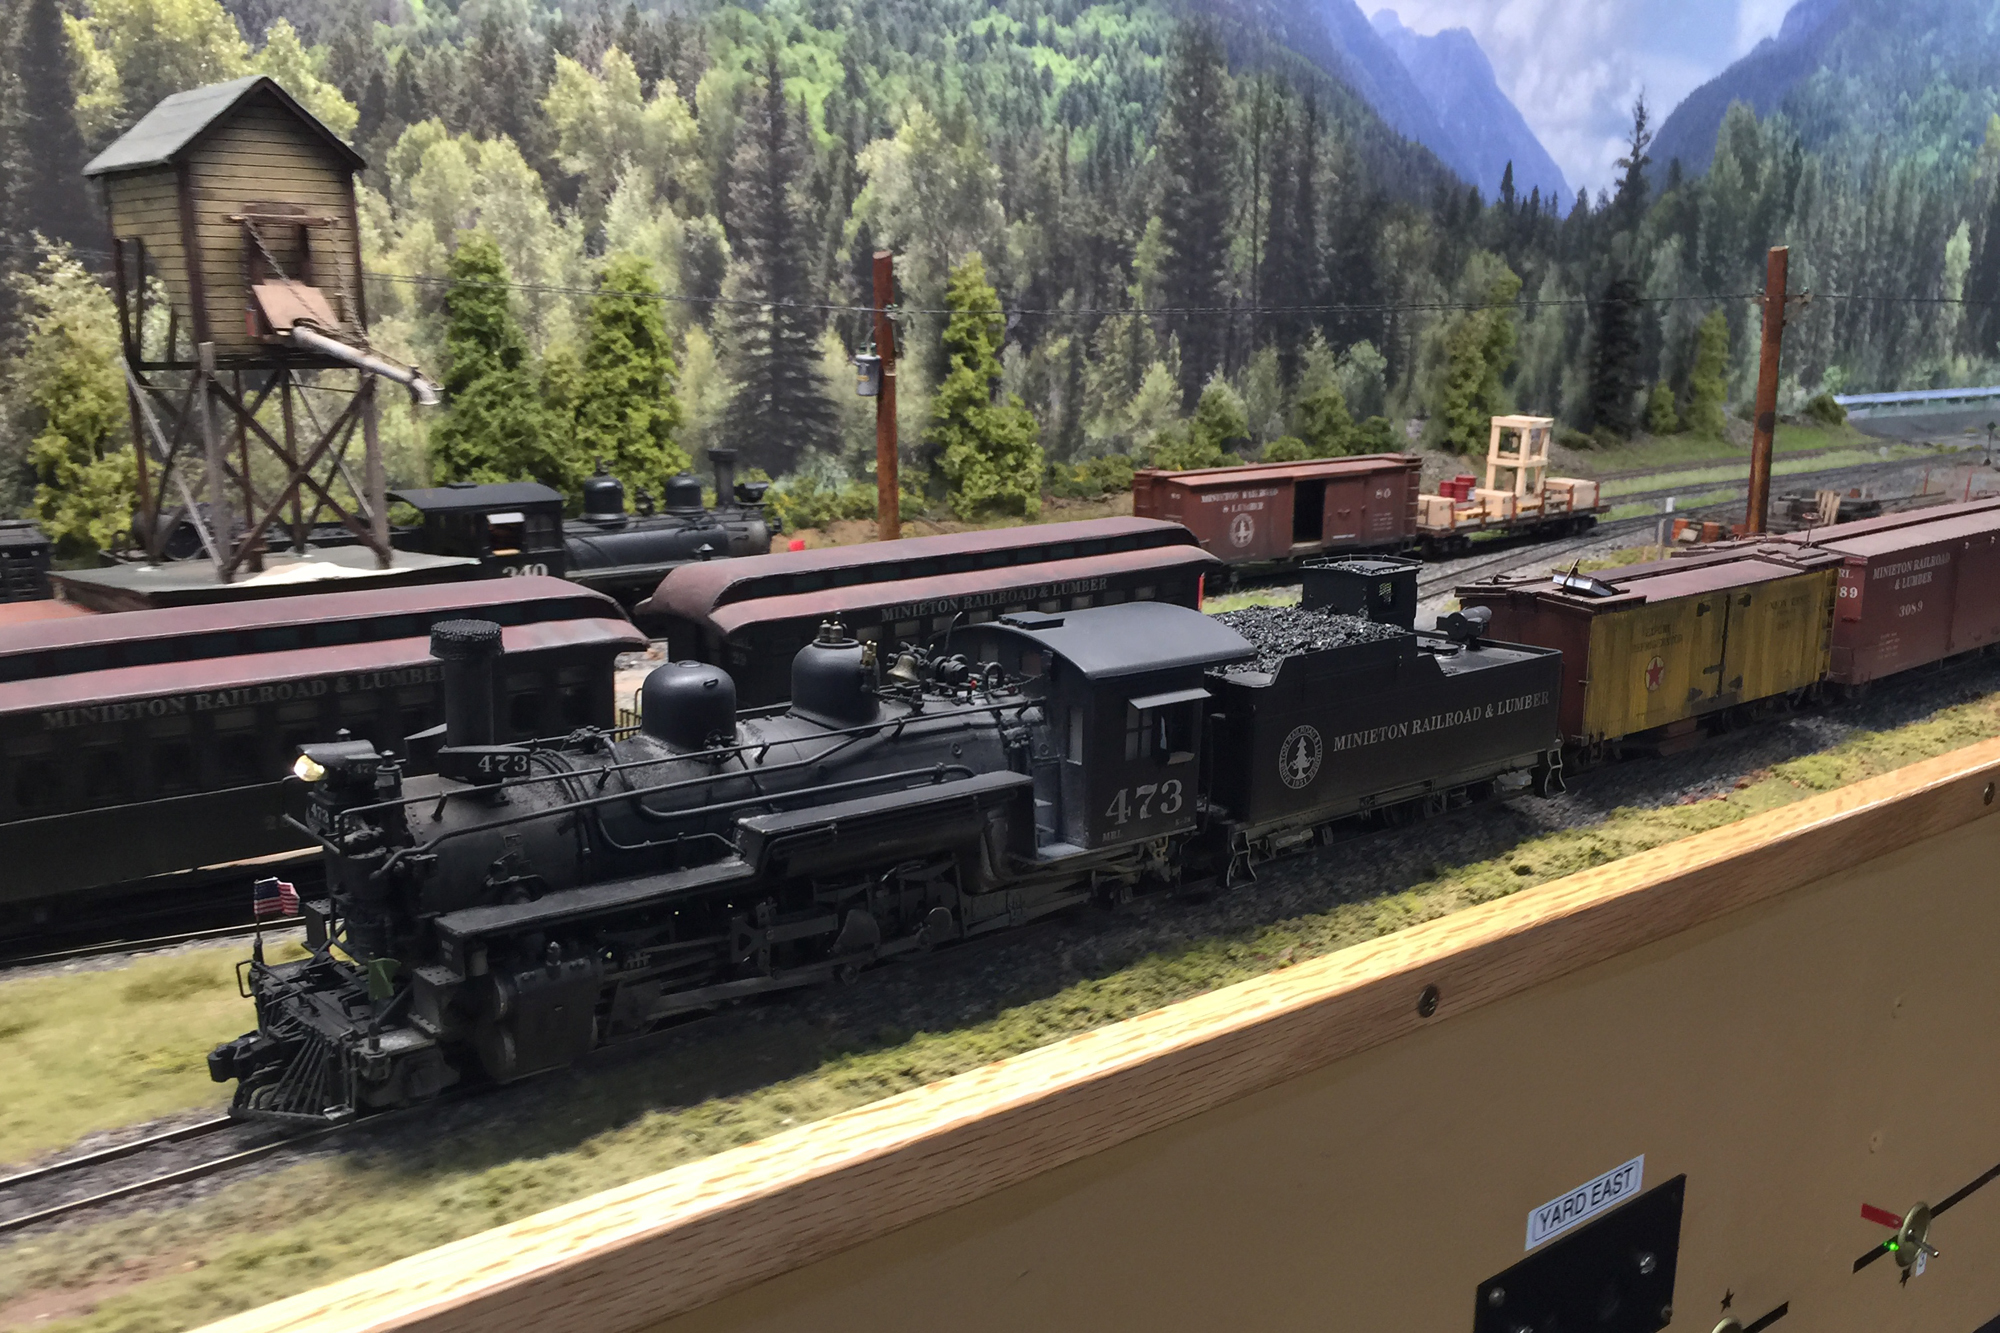 San Diego Division Member Wayne and his On30 model railroad.